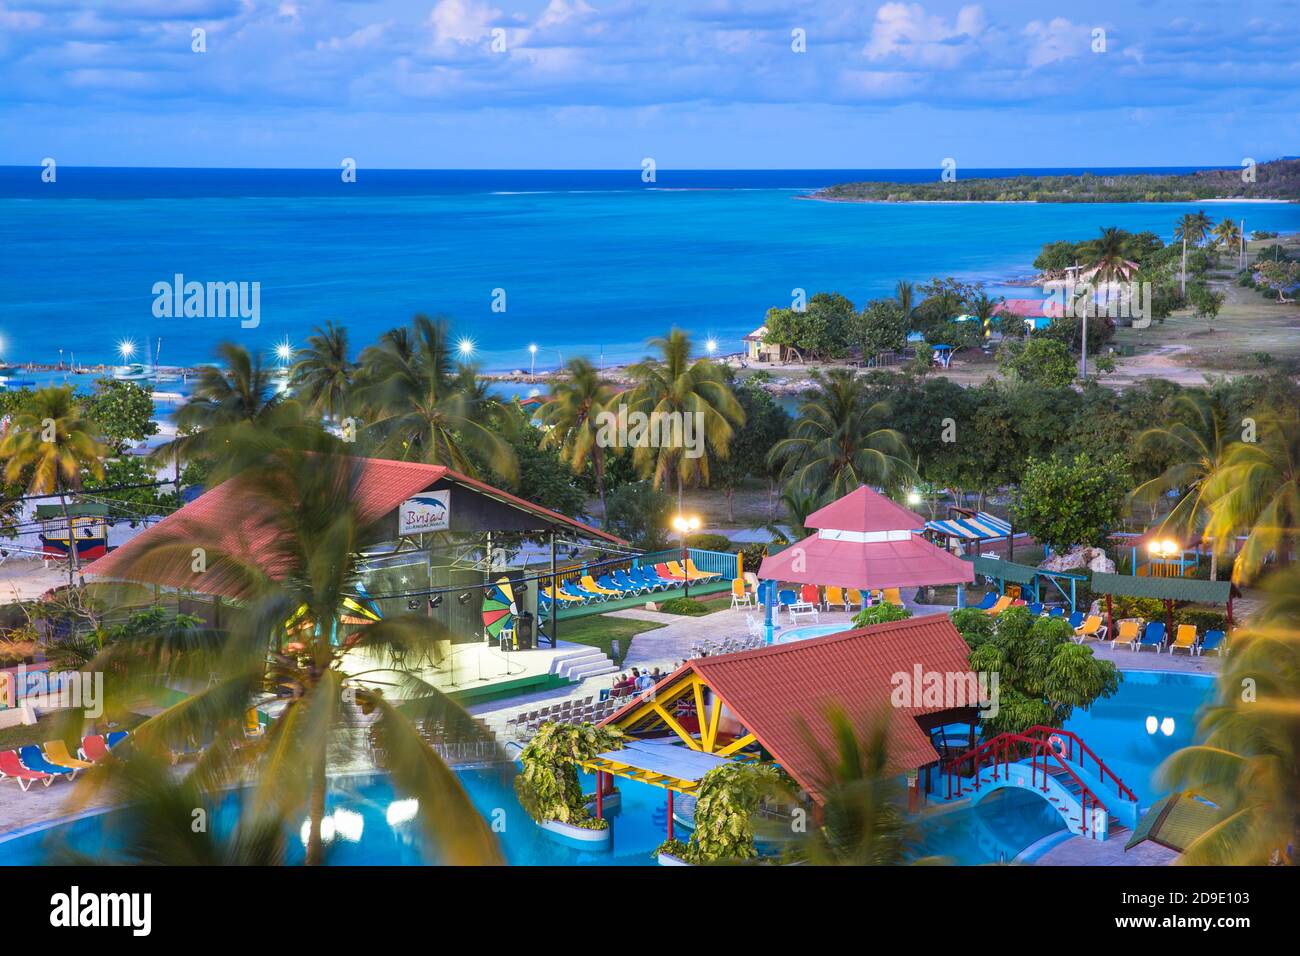 Cuba, province de Holguin, Playa Guardalvaca, vue sur la piscine de l'hôtel Brisas Banque D'Images